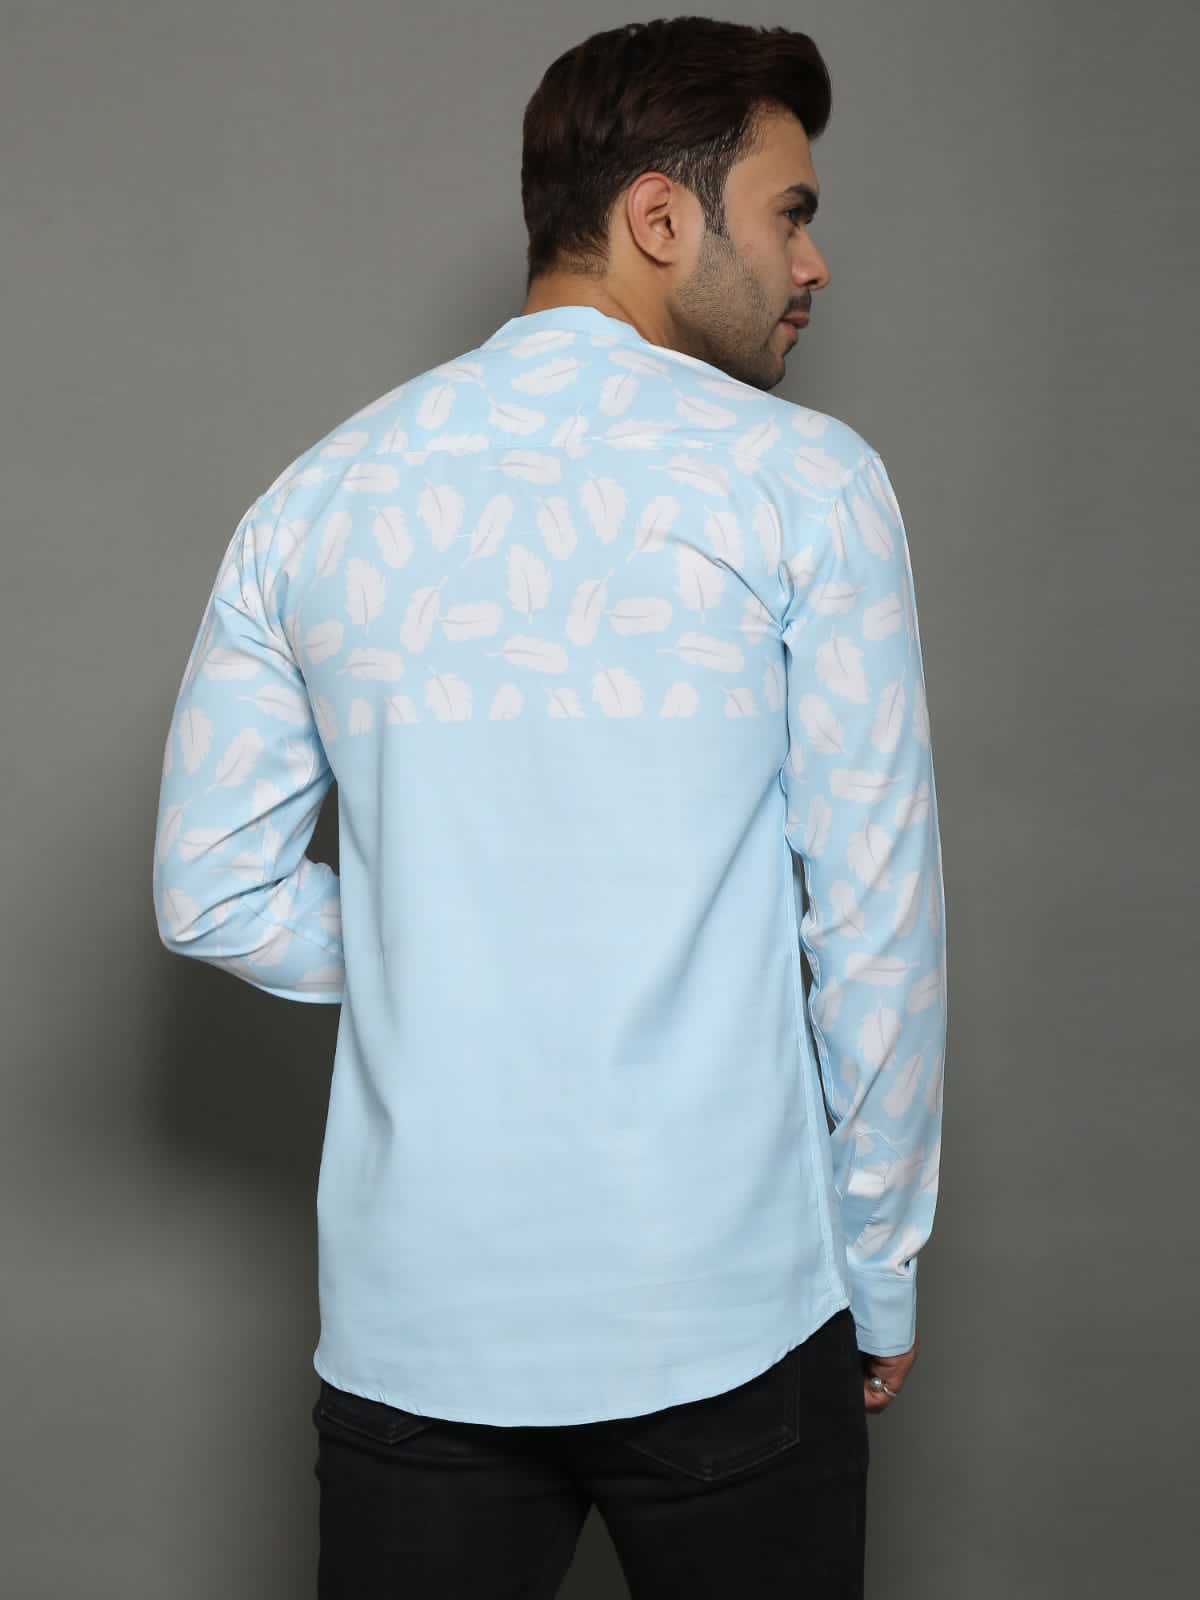 Details View - Kurta type shirt  photos - Casual Solid Kurta Shirt, Slim Fit, 100% Cotton, Stylish, Chinos, Tapered Denim, Sneakers, Dwarkesh Enterprise, Surat, Gujarat, India